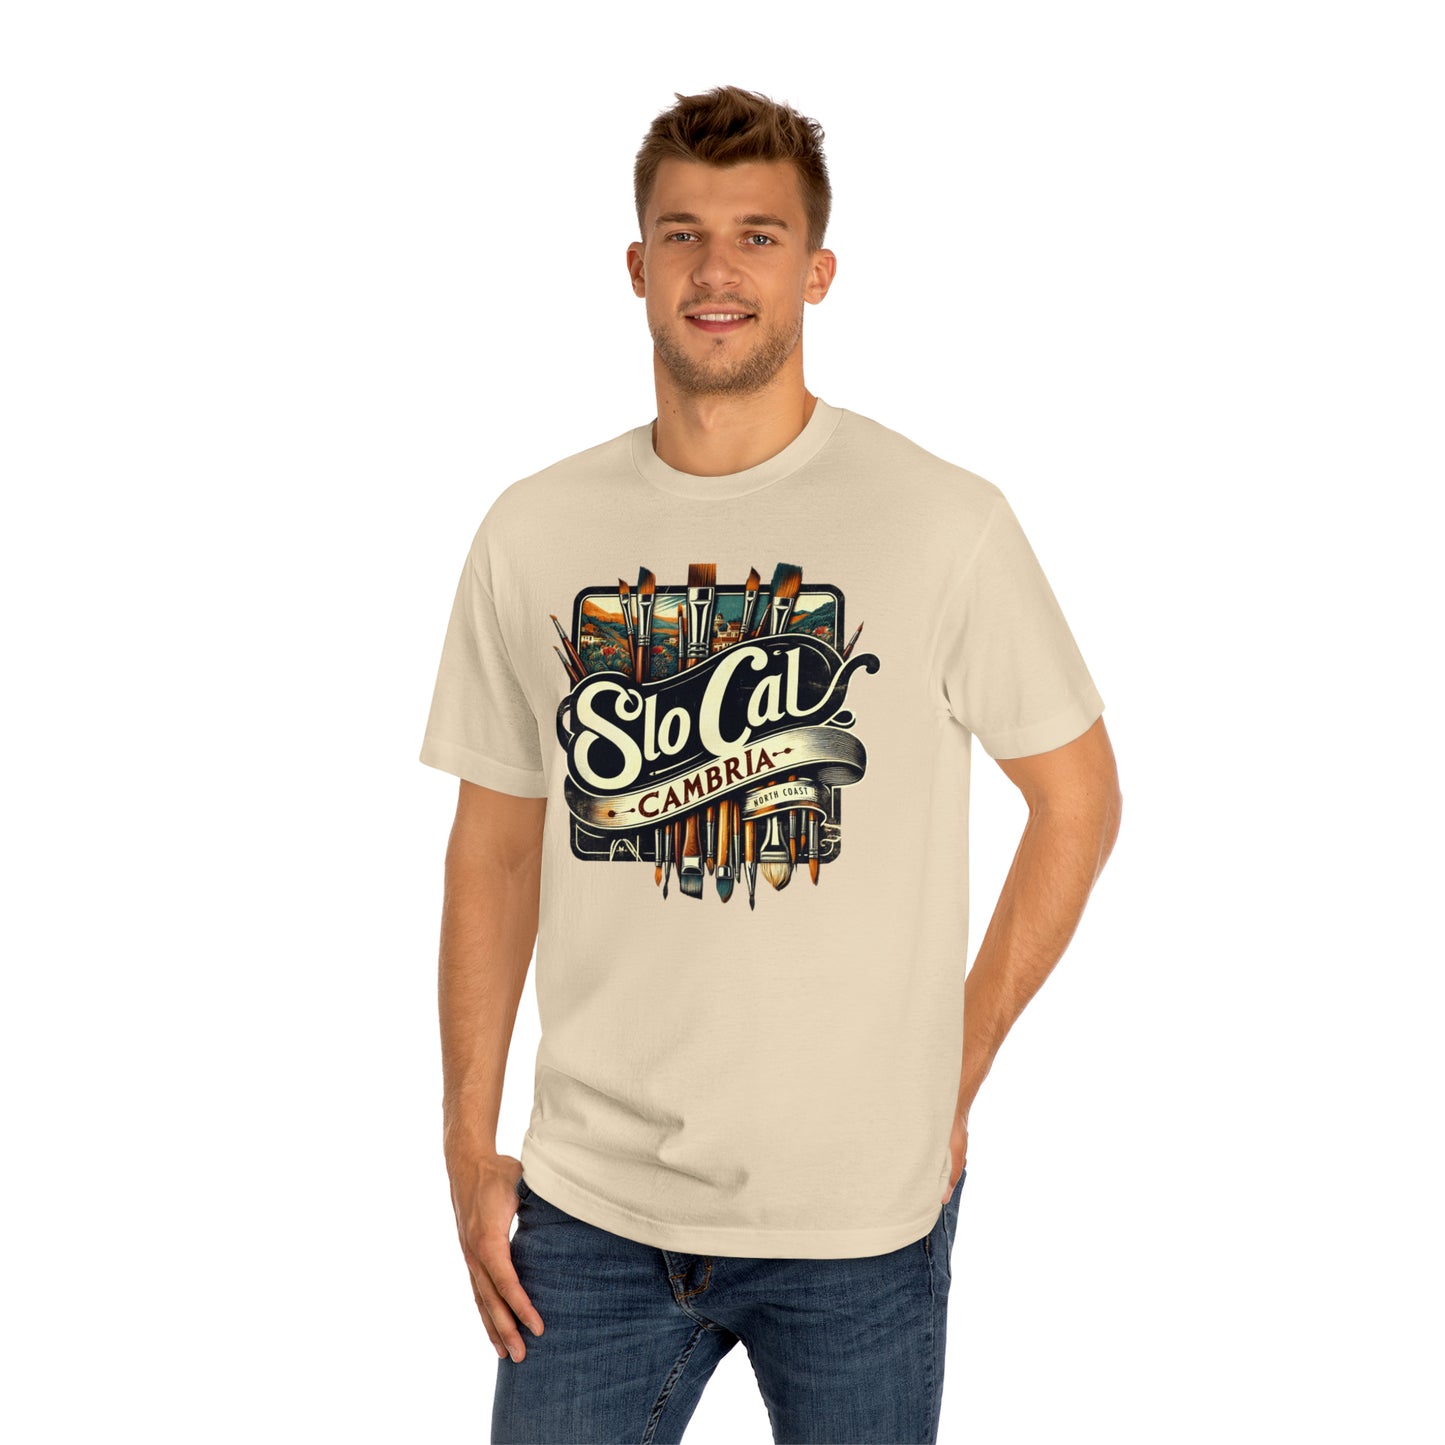 Cambria Artisan Spirit Tee - SLO CAL Creative Community Unisex T-shirt